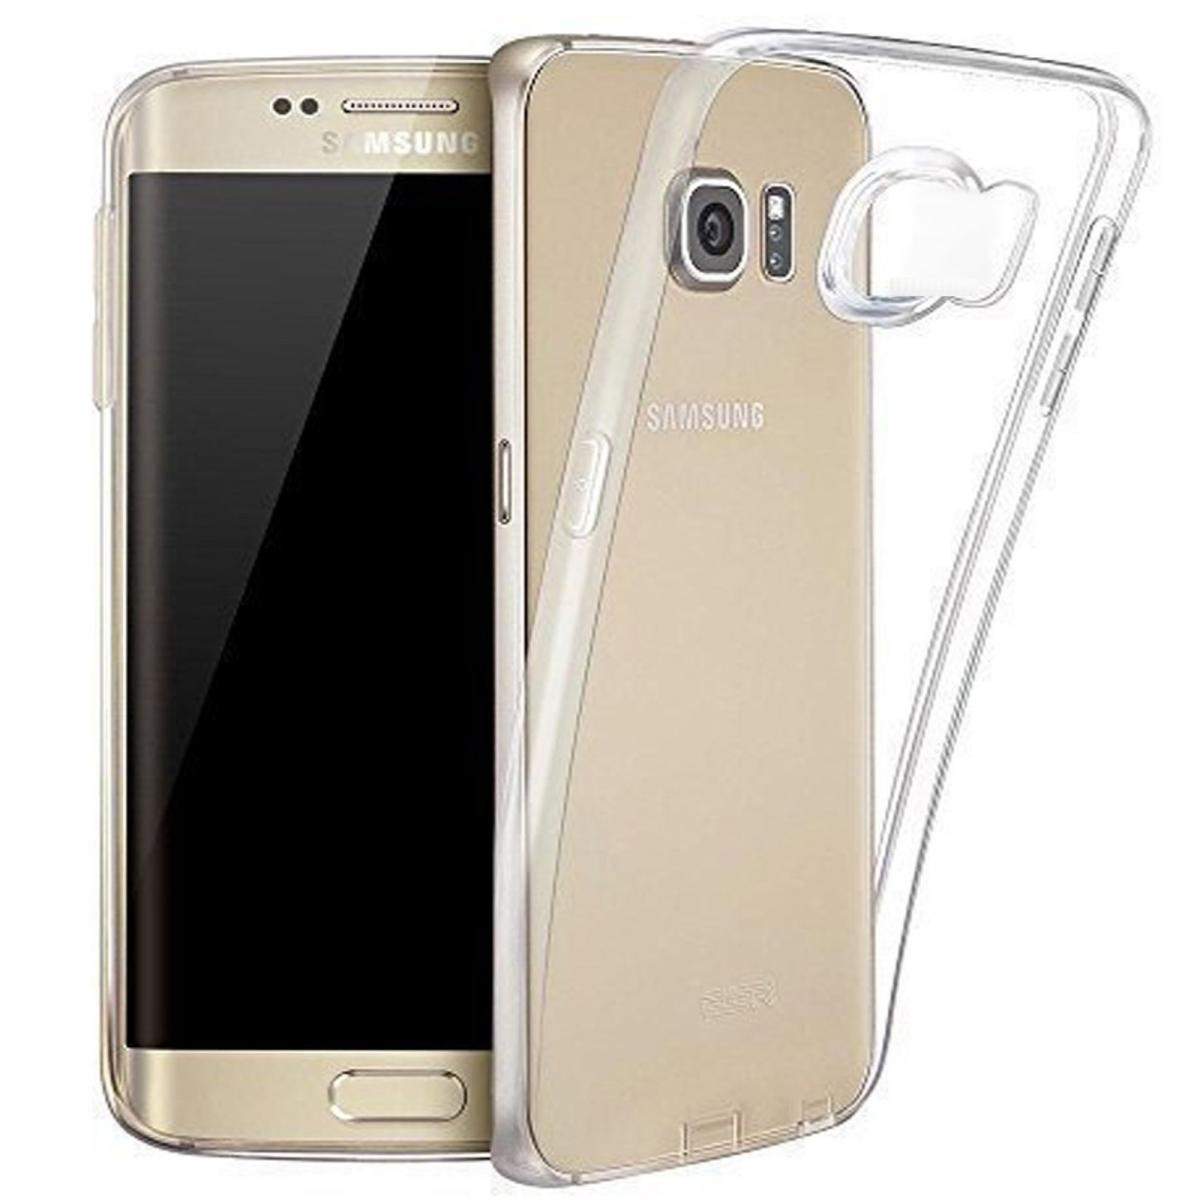 Super Transparente Tpu Gel Skin Funda Protectora Protector De Pantalla Para Samsung Galaxy S6 